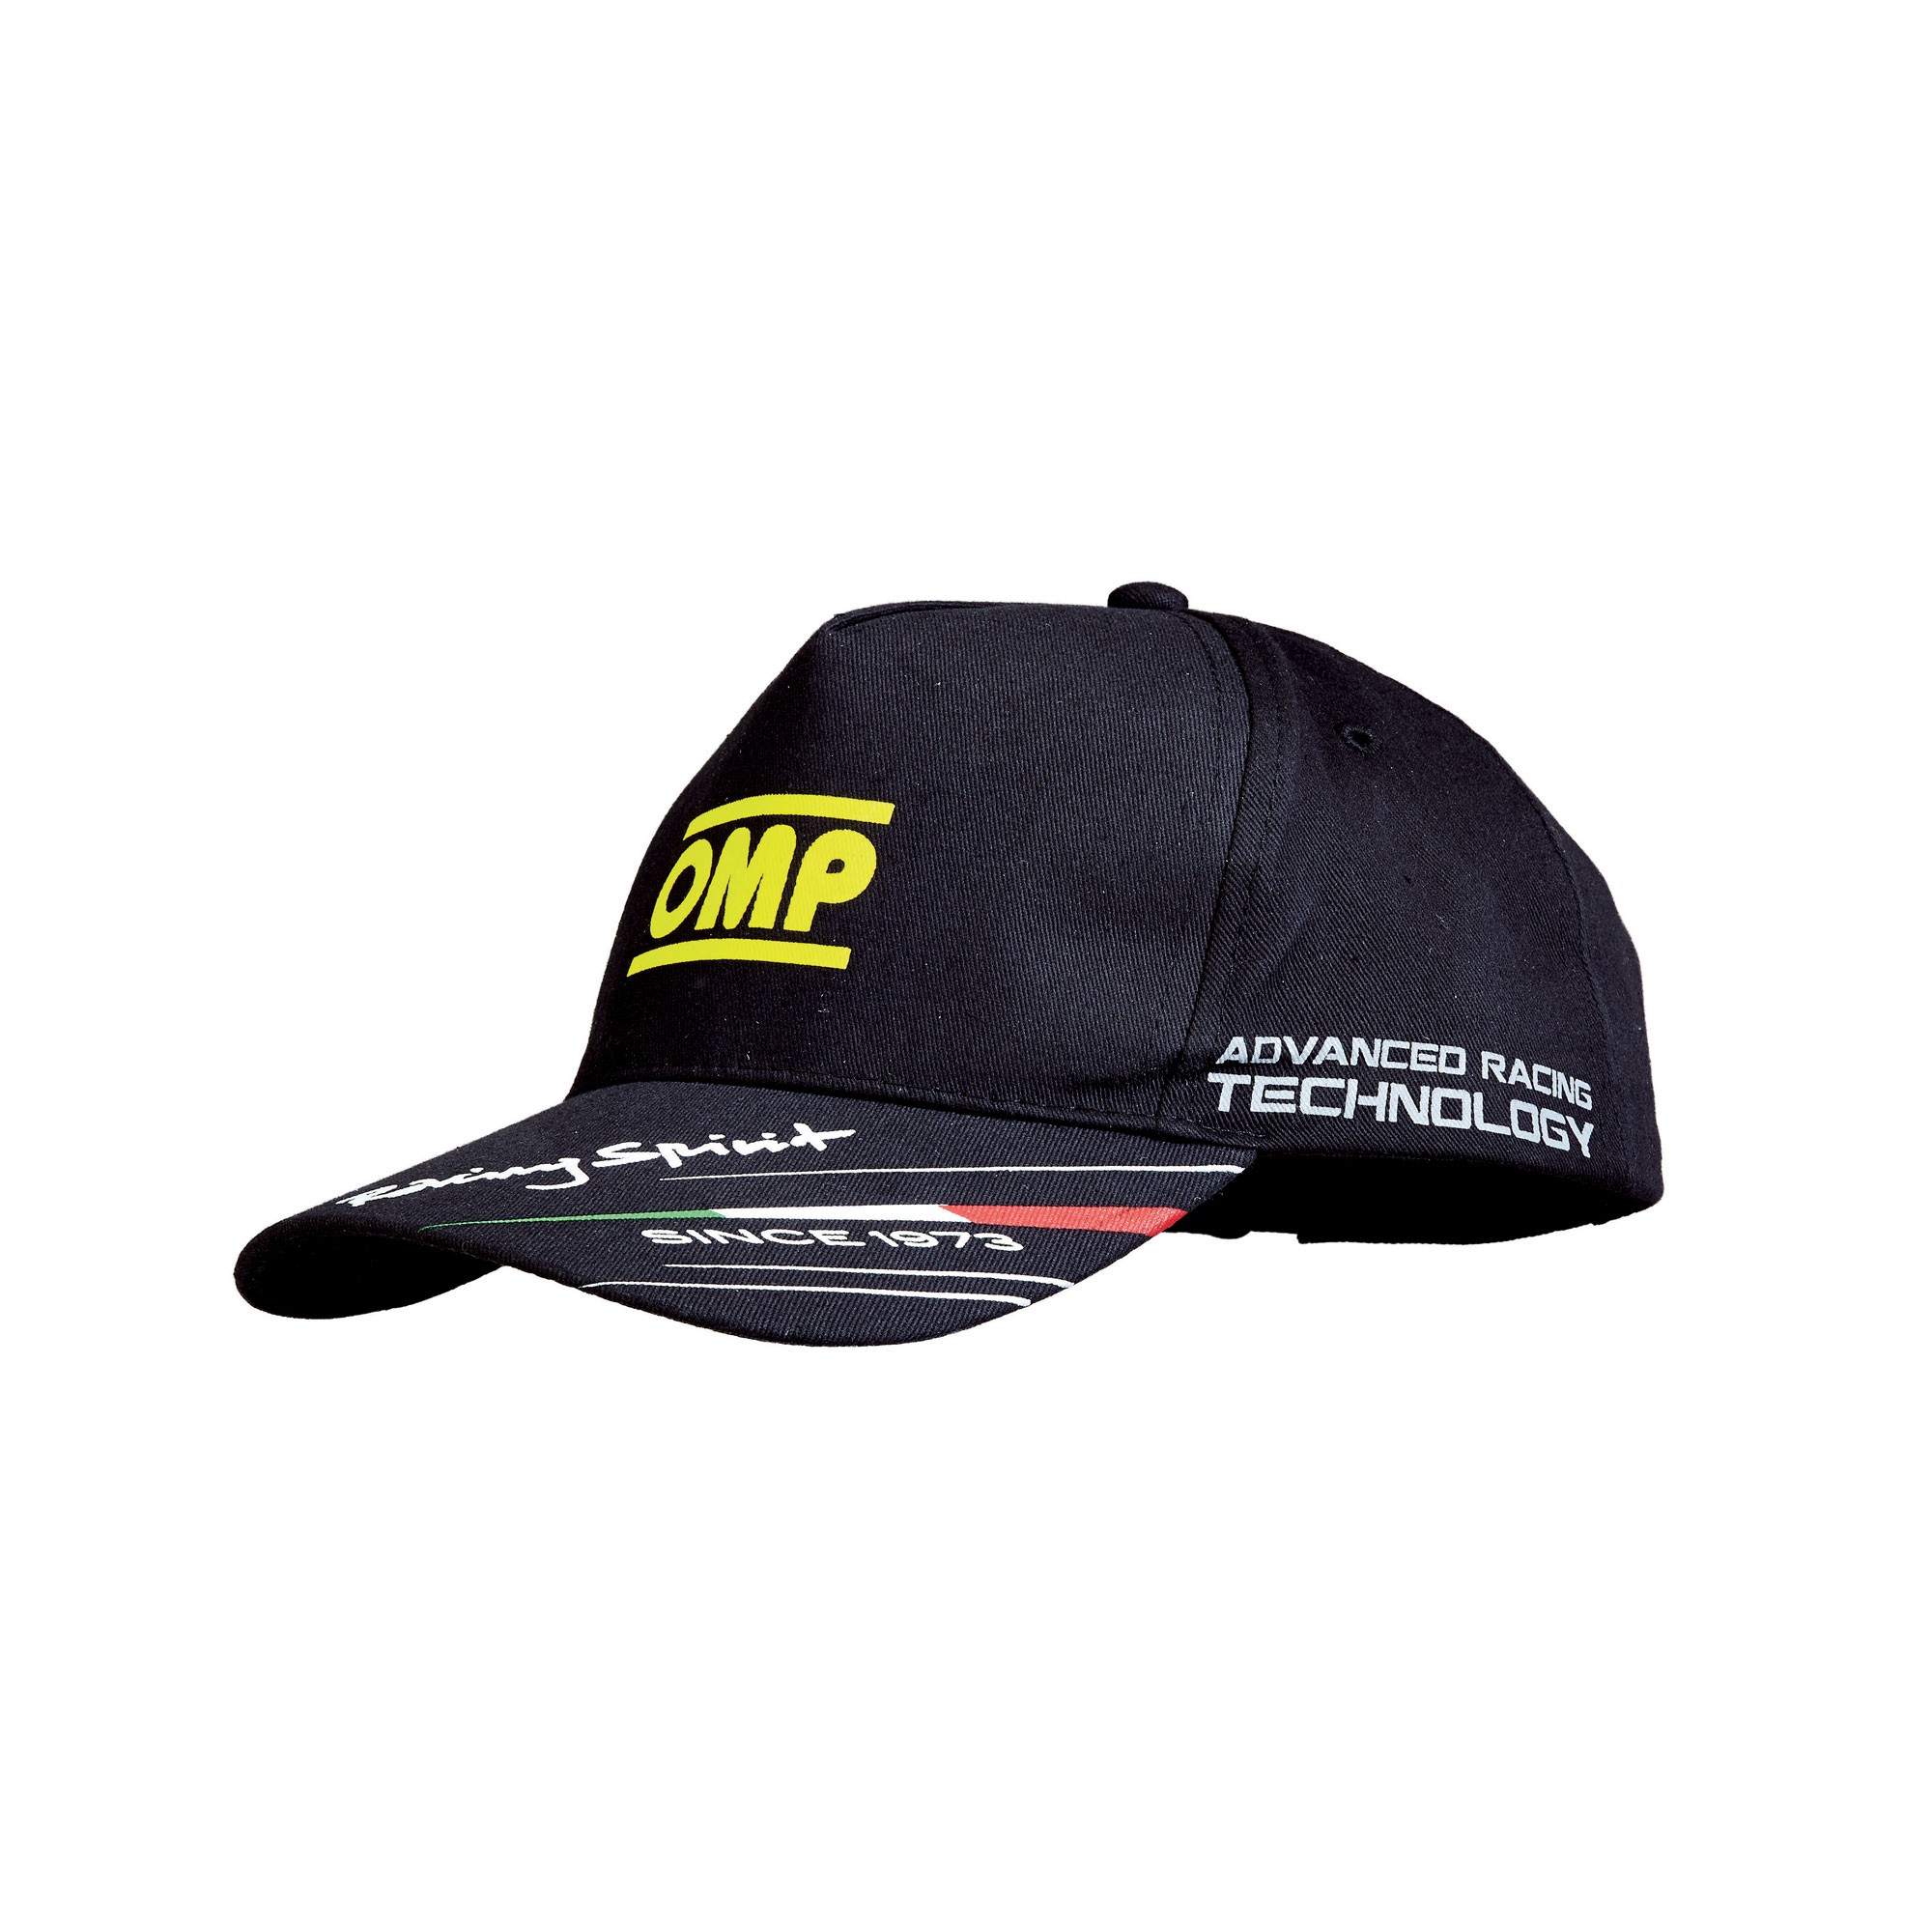 OMP Racing Cap schwarz Mütze Kappe für Motorsport Kart Erwachsenen 